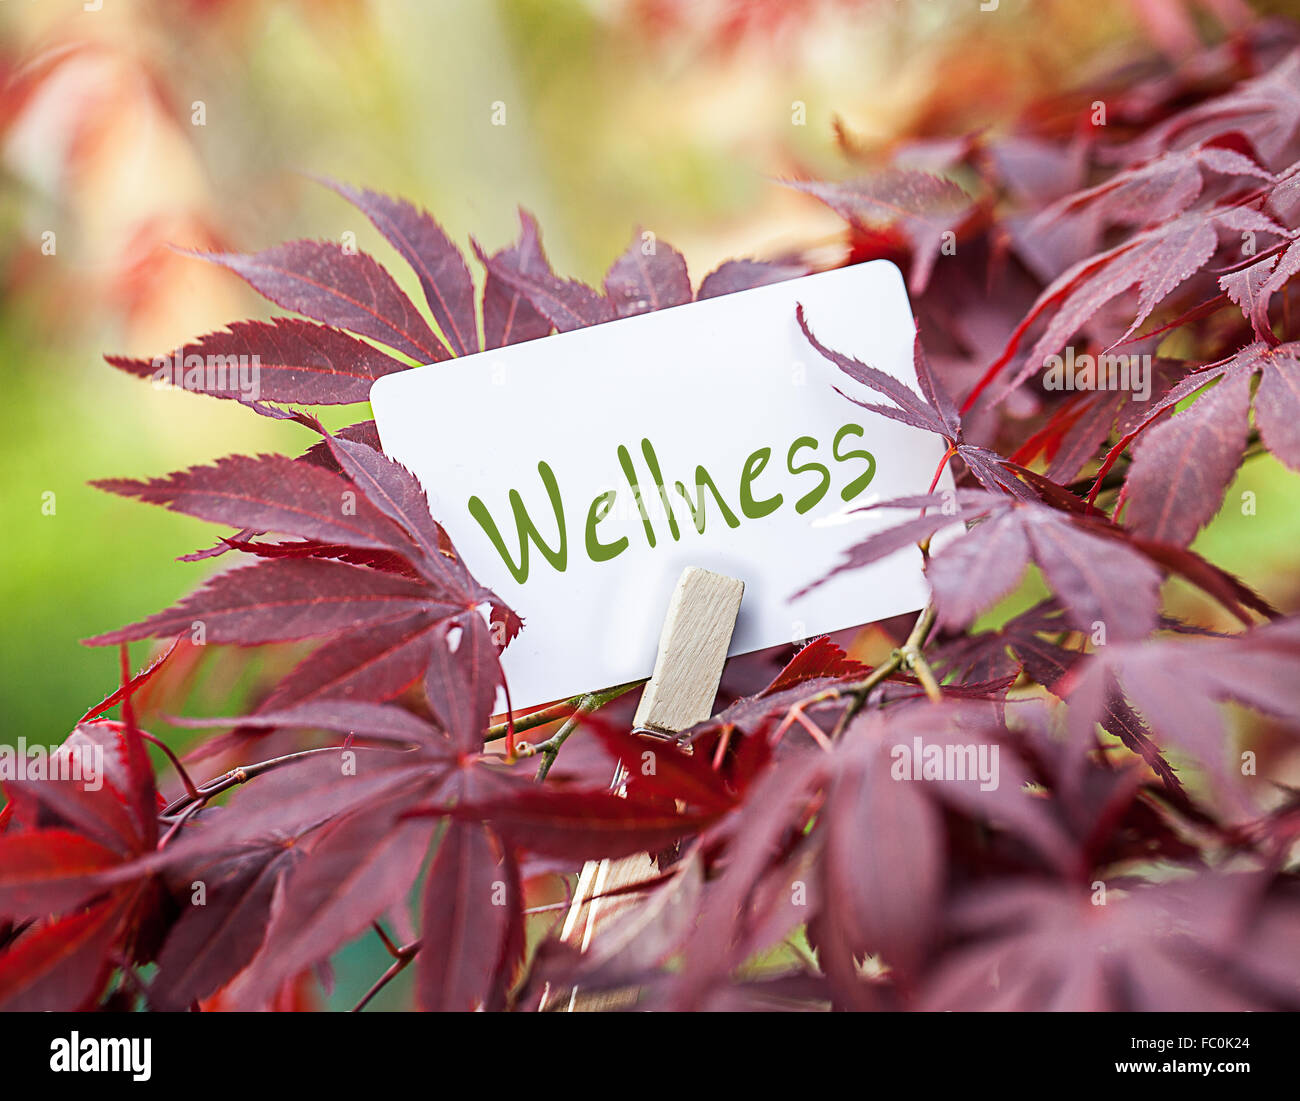 The Word “Wellness” in a fan-maple tree Stock Photo